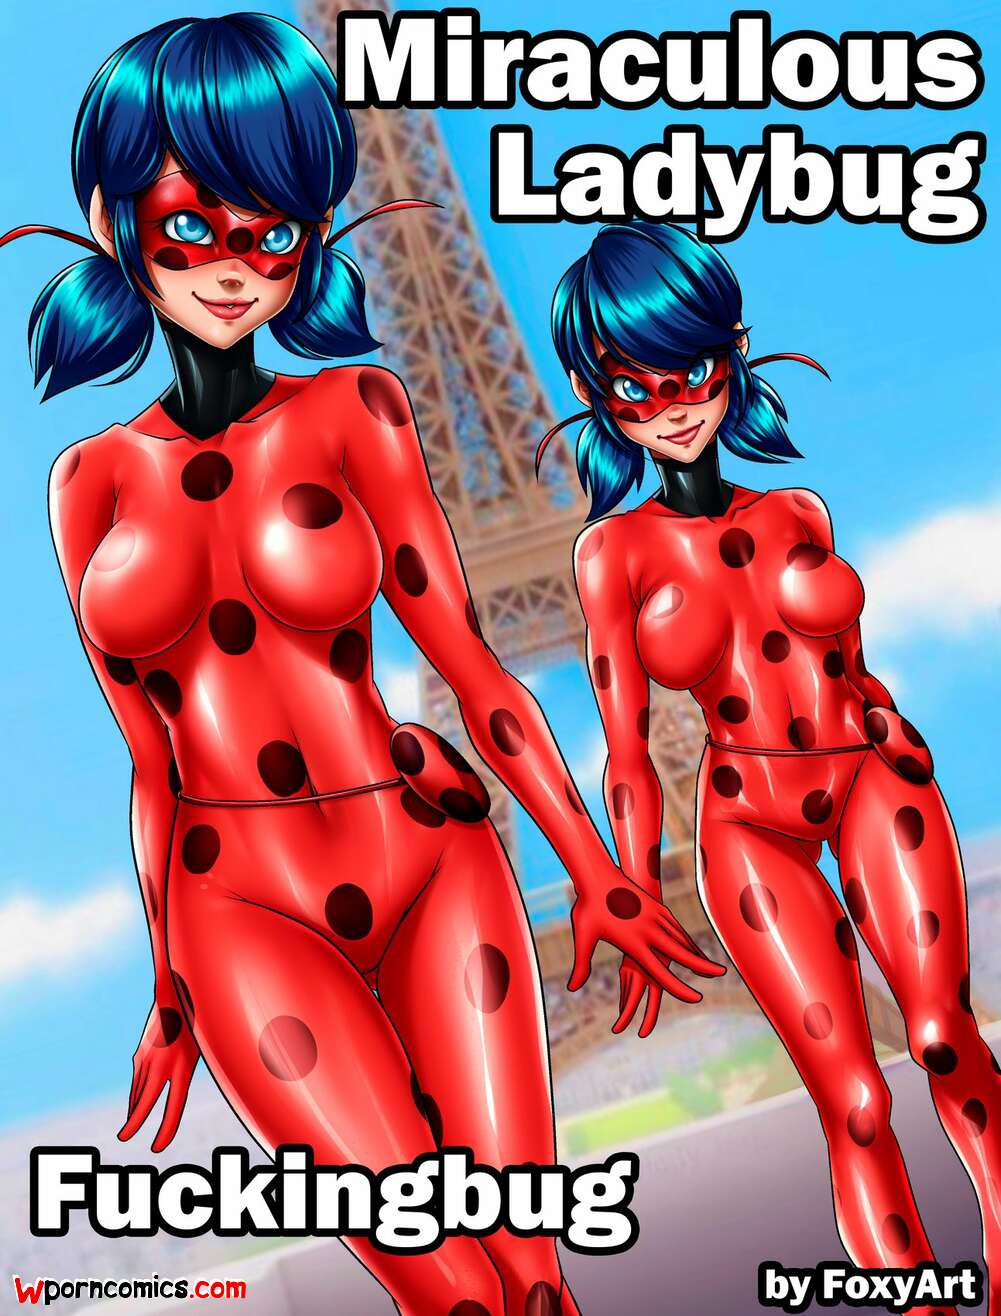 Lady bug comics porno hentay